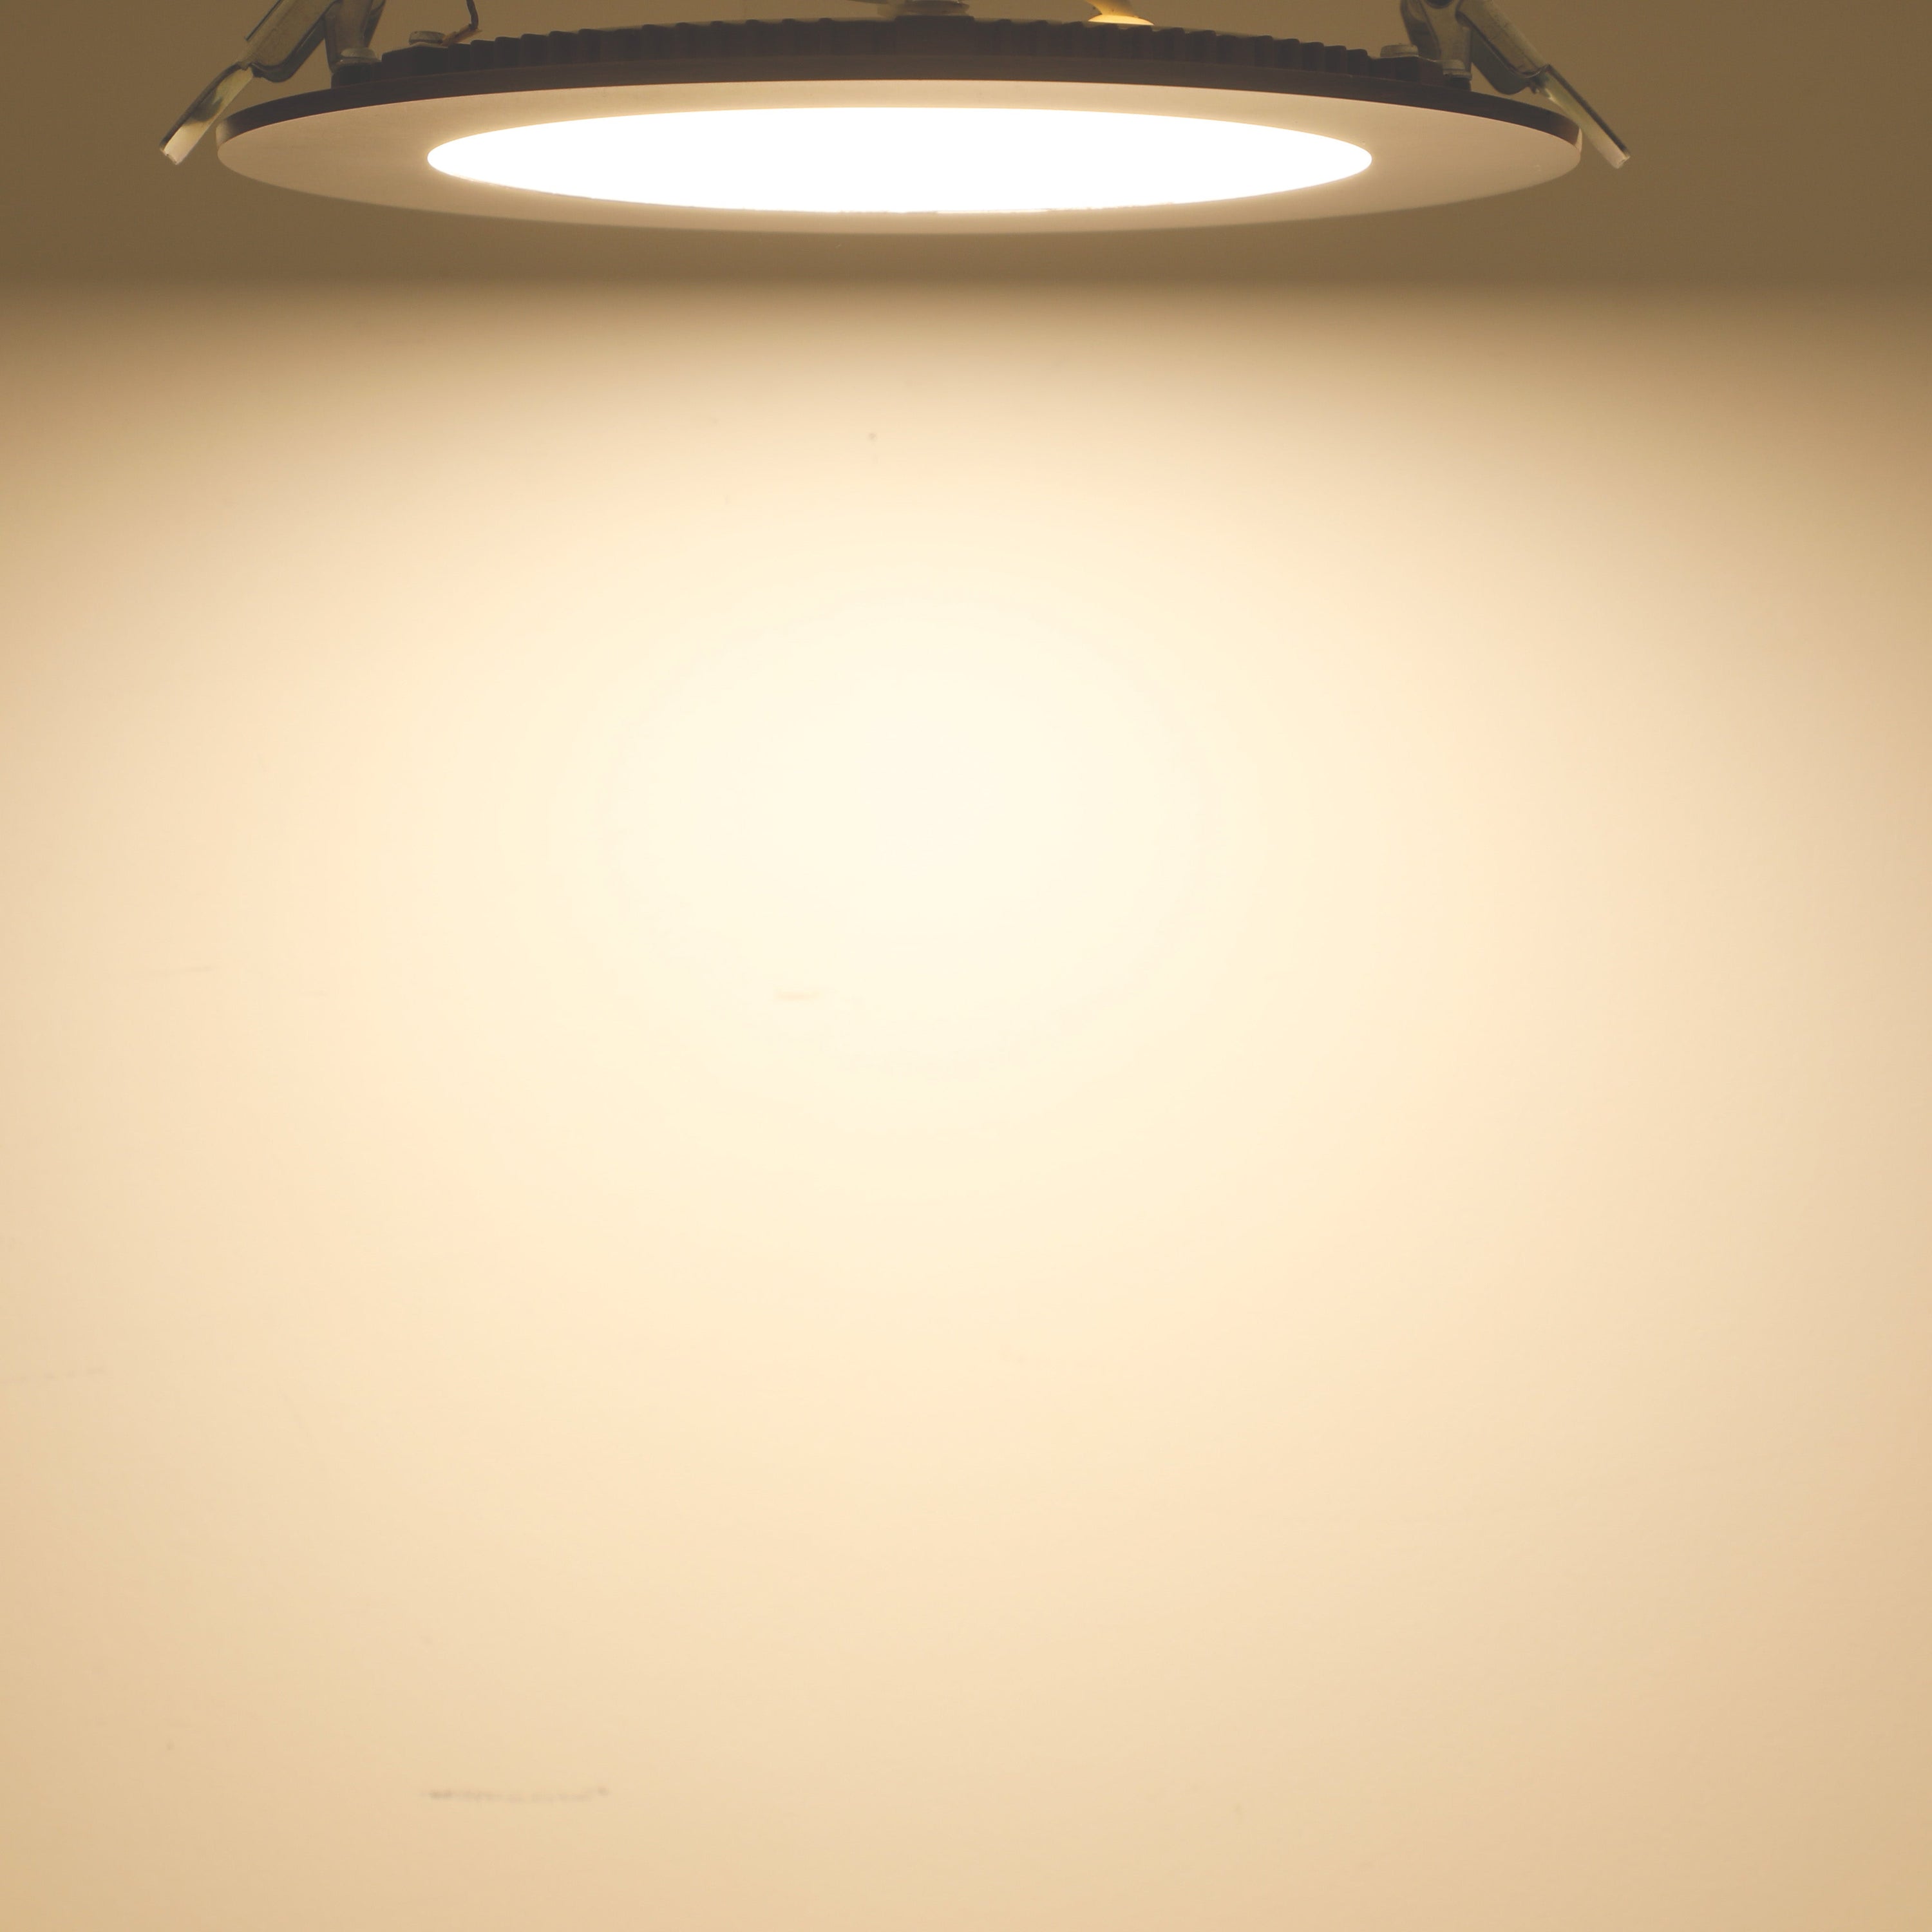 SlimPanel Colour 3" LED Ultra-thin Recessed Light - Oil Rubbed Bronze - 7W - Single CCT